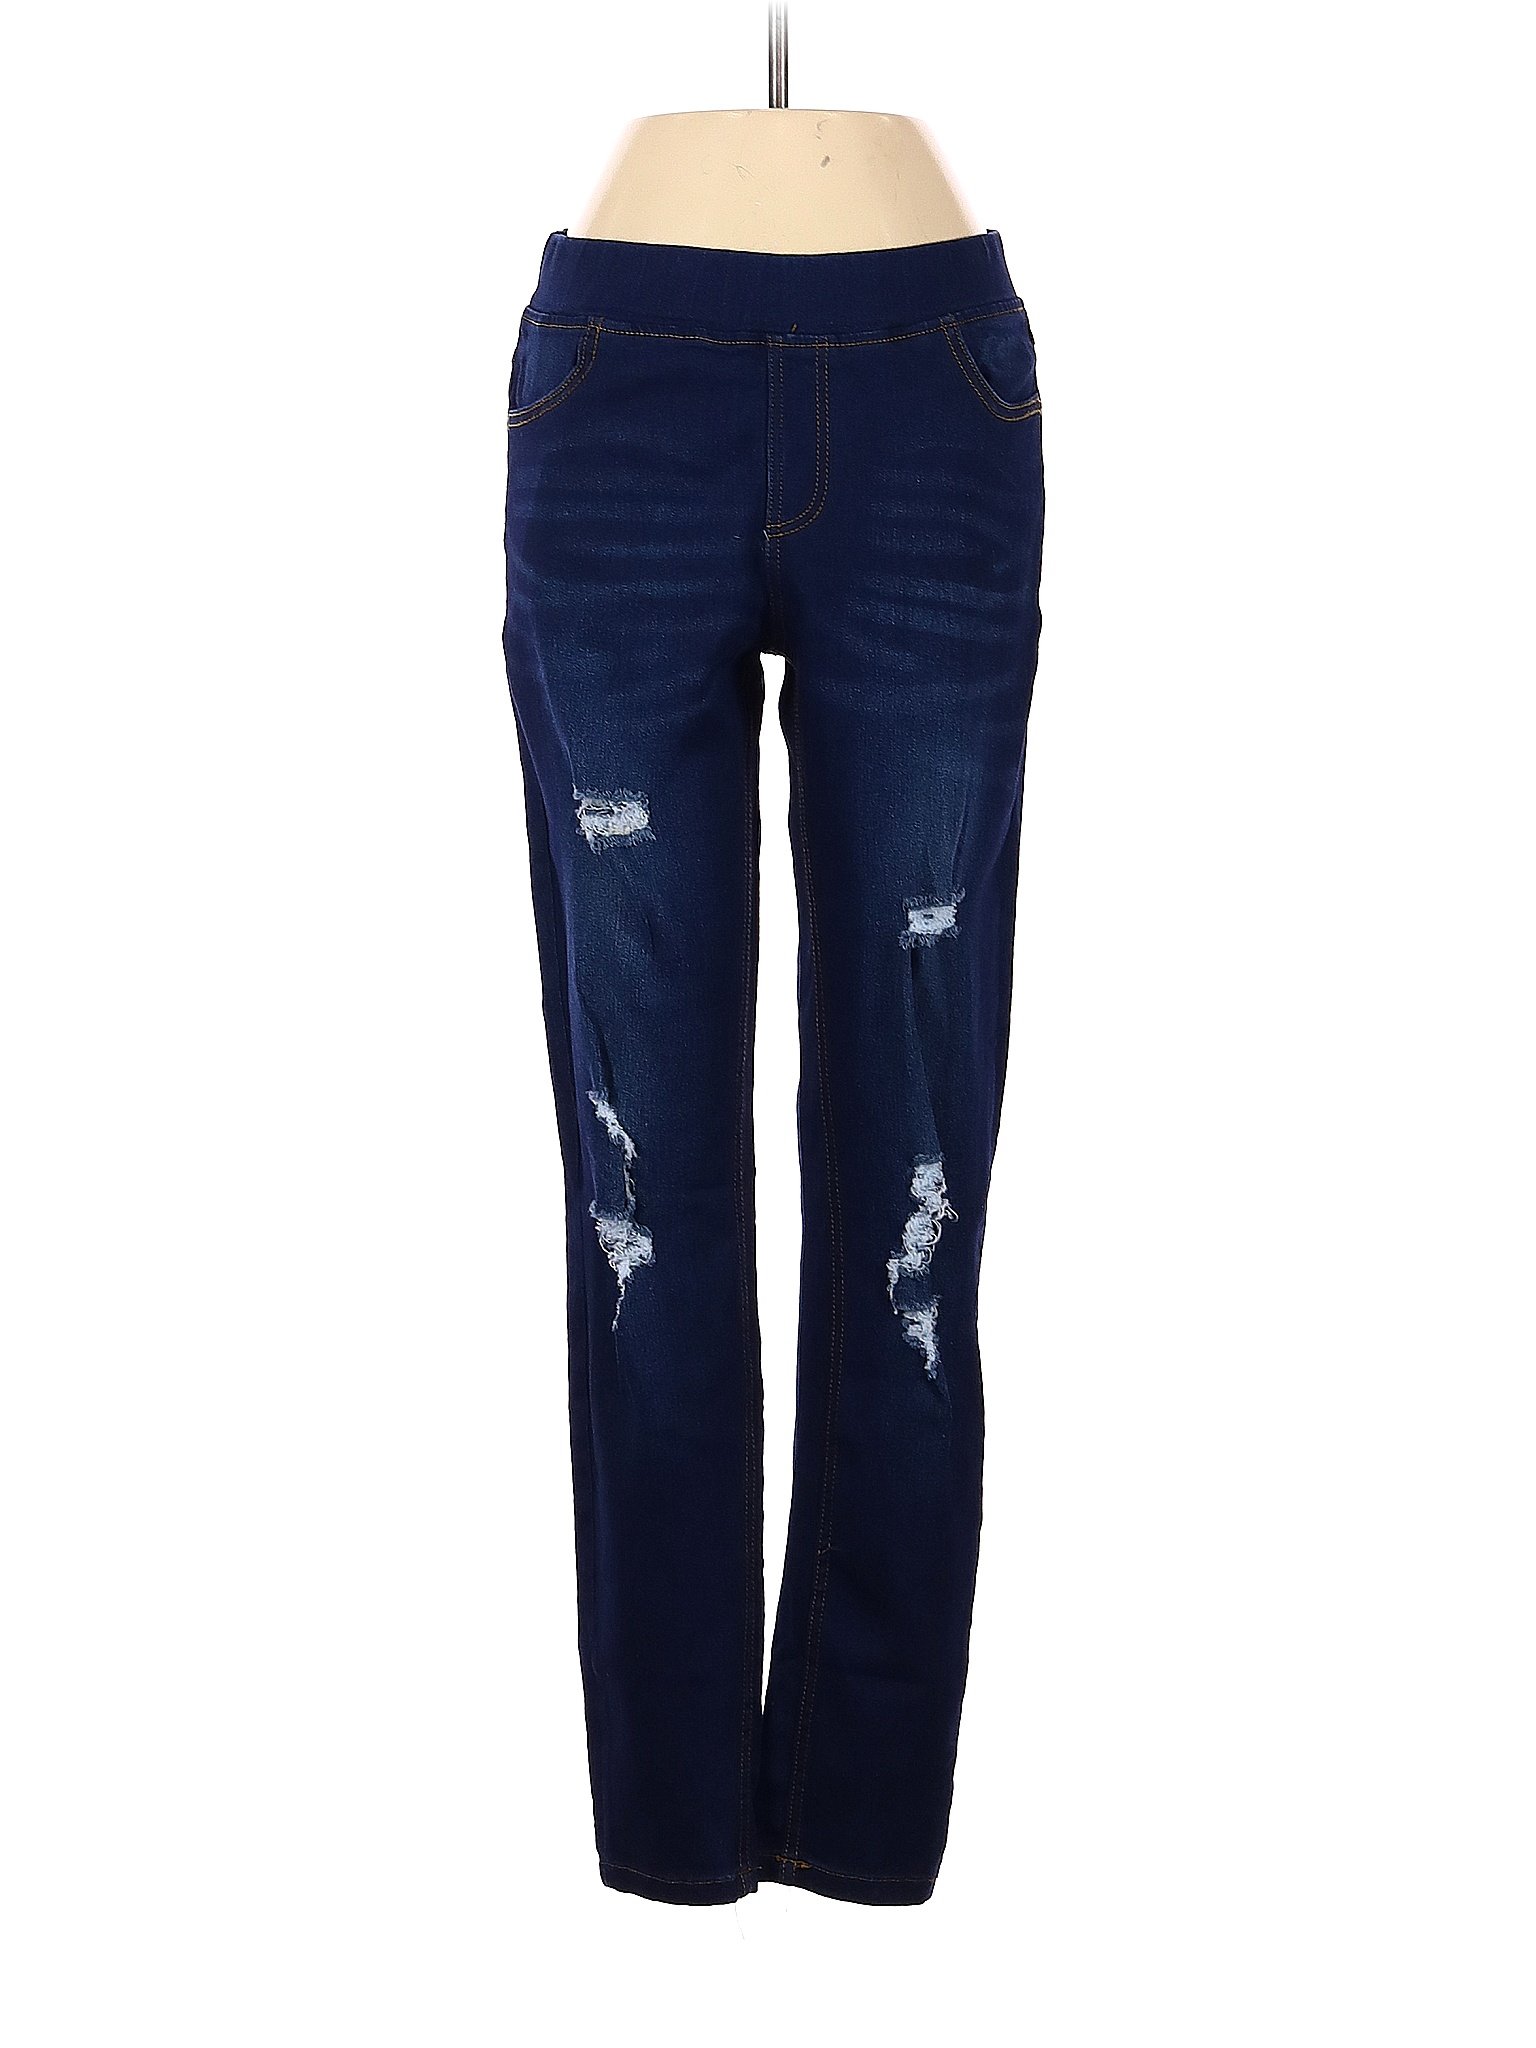 JVINI Blue Jeans Size S - 87% off | thredUP